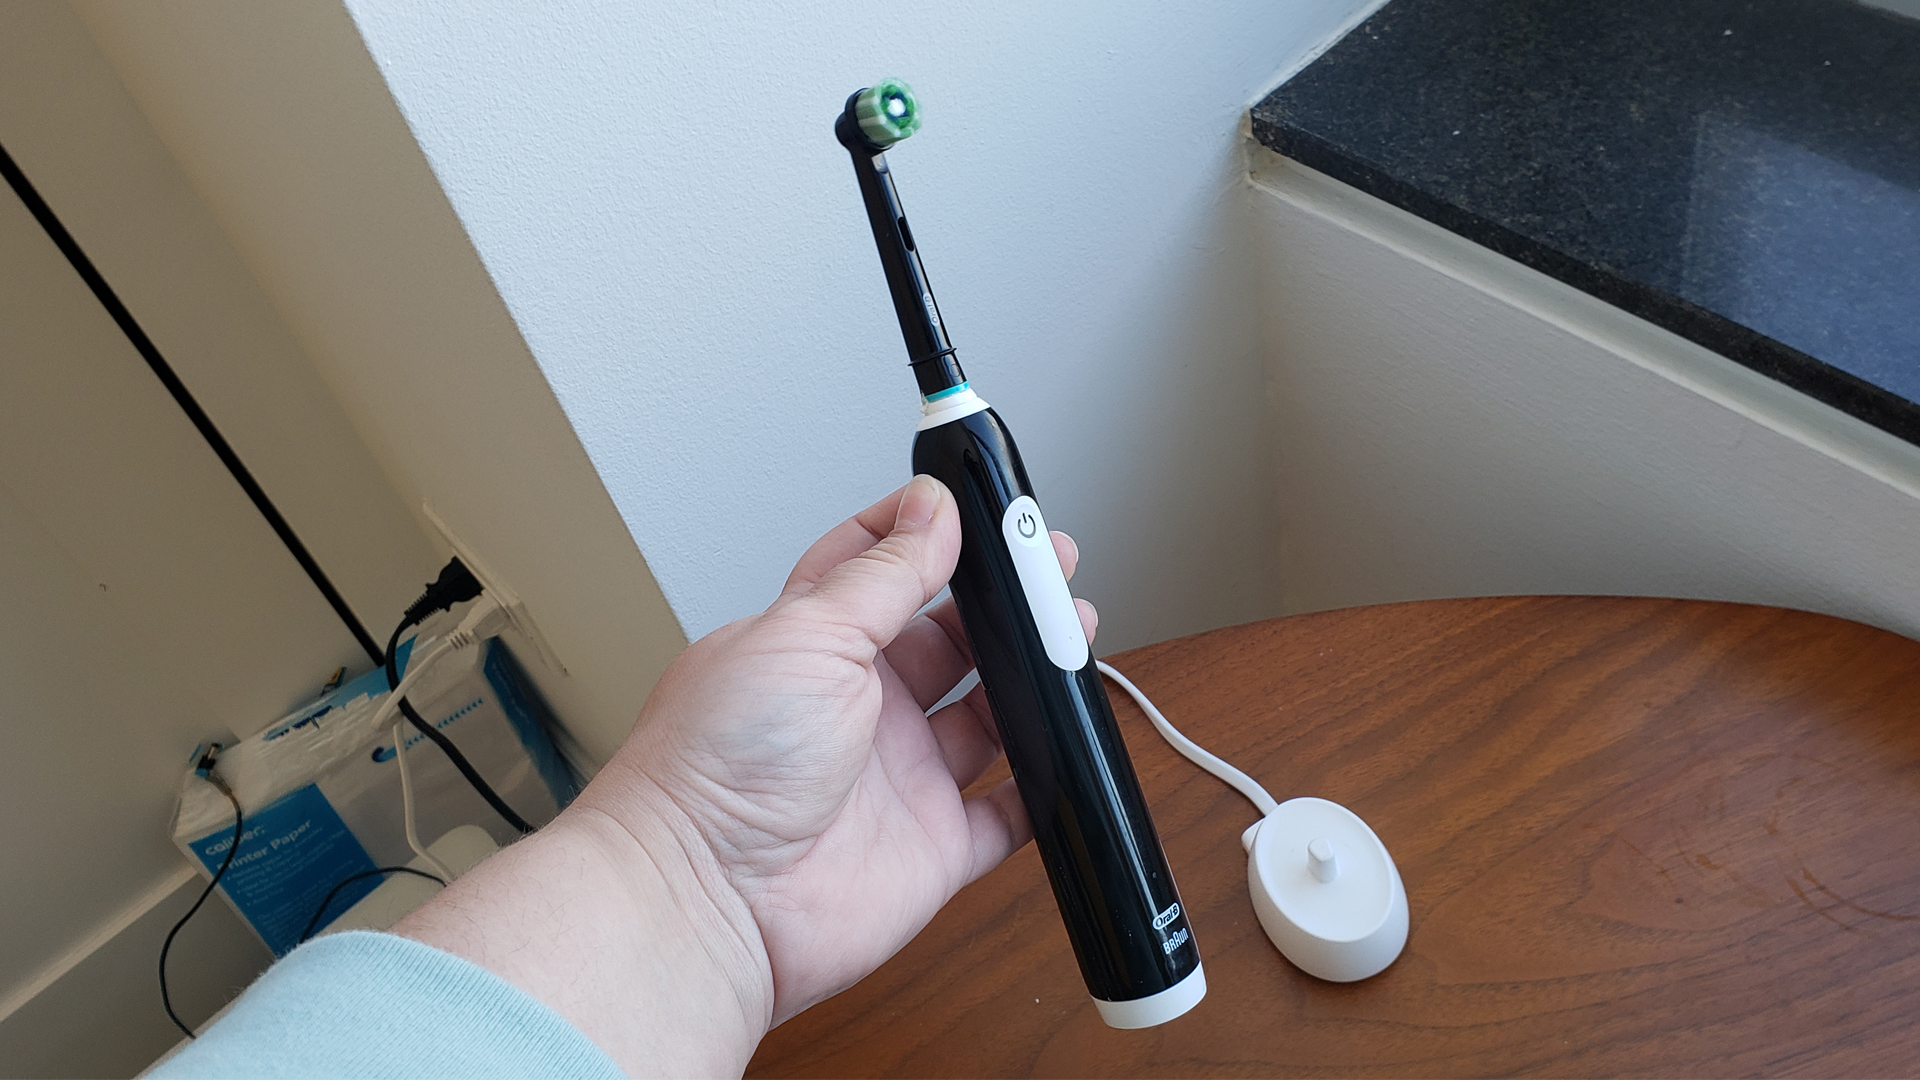 Oral B Pro electric toothbrush 1000